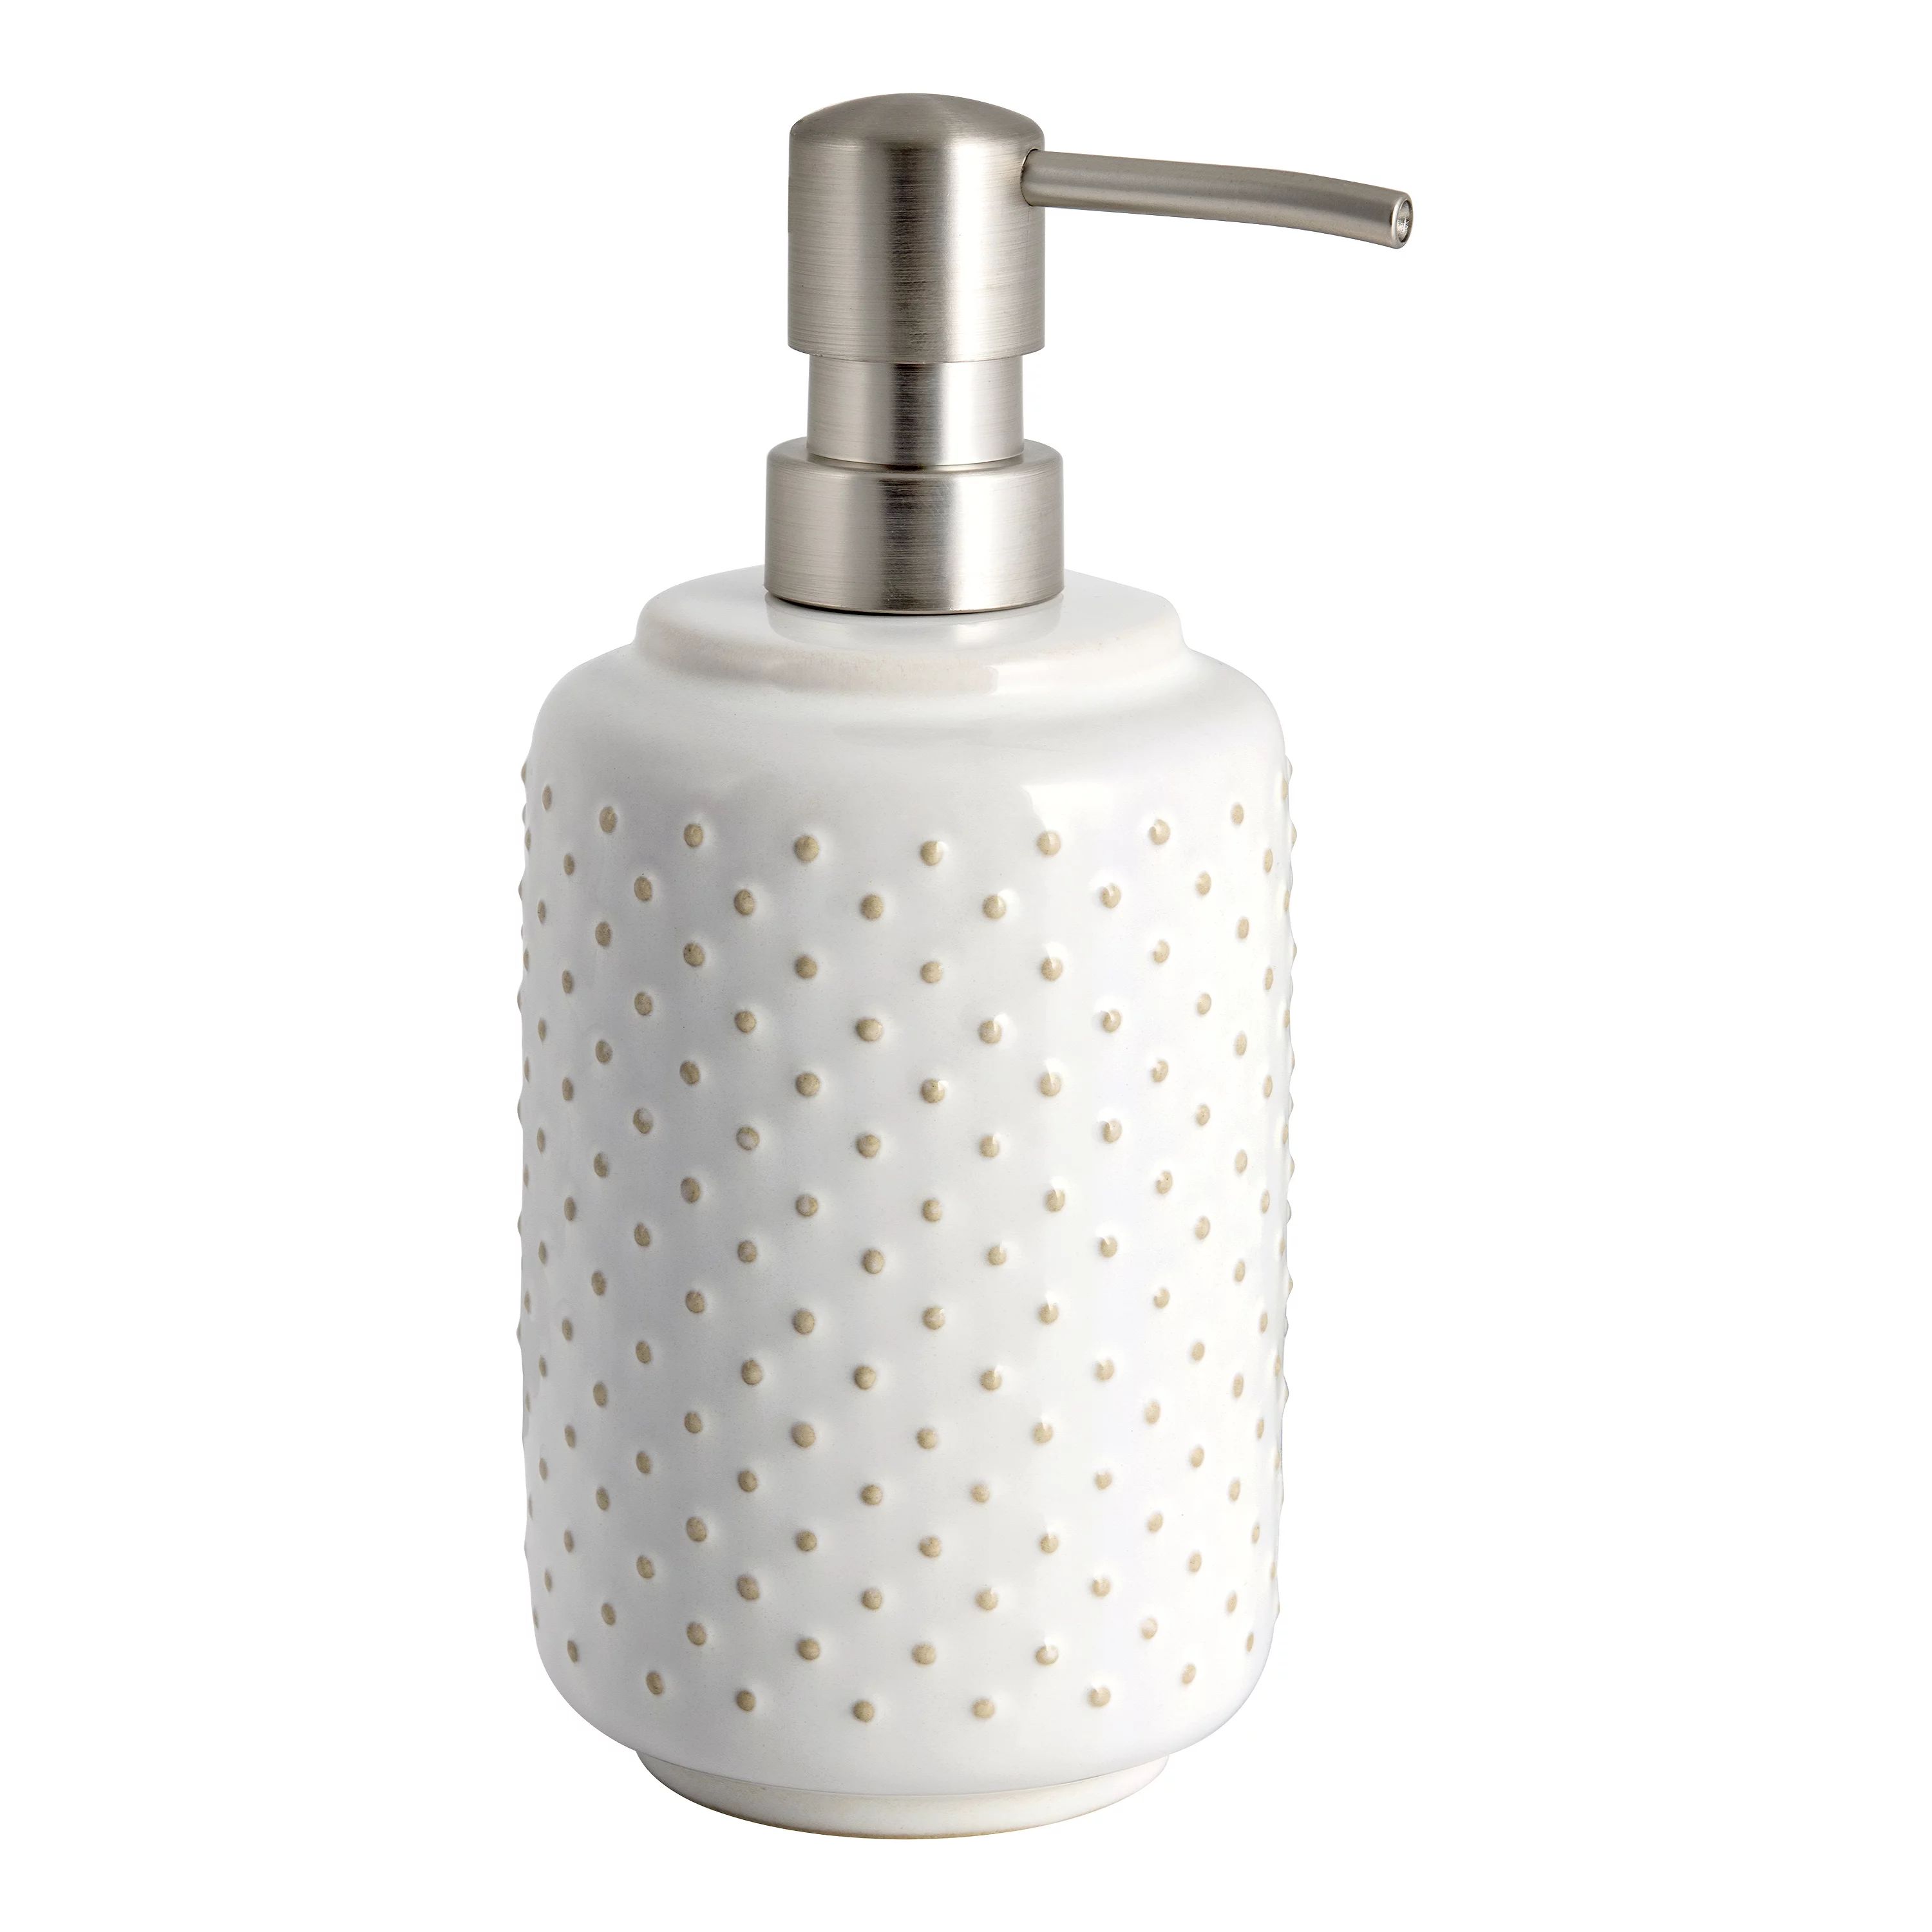 Better Homes & Gardens Reactive Glazed Textured Ceramic Lotion Pump in Creamy White | Walmart (US)